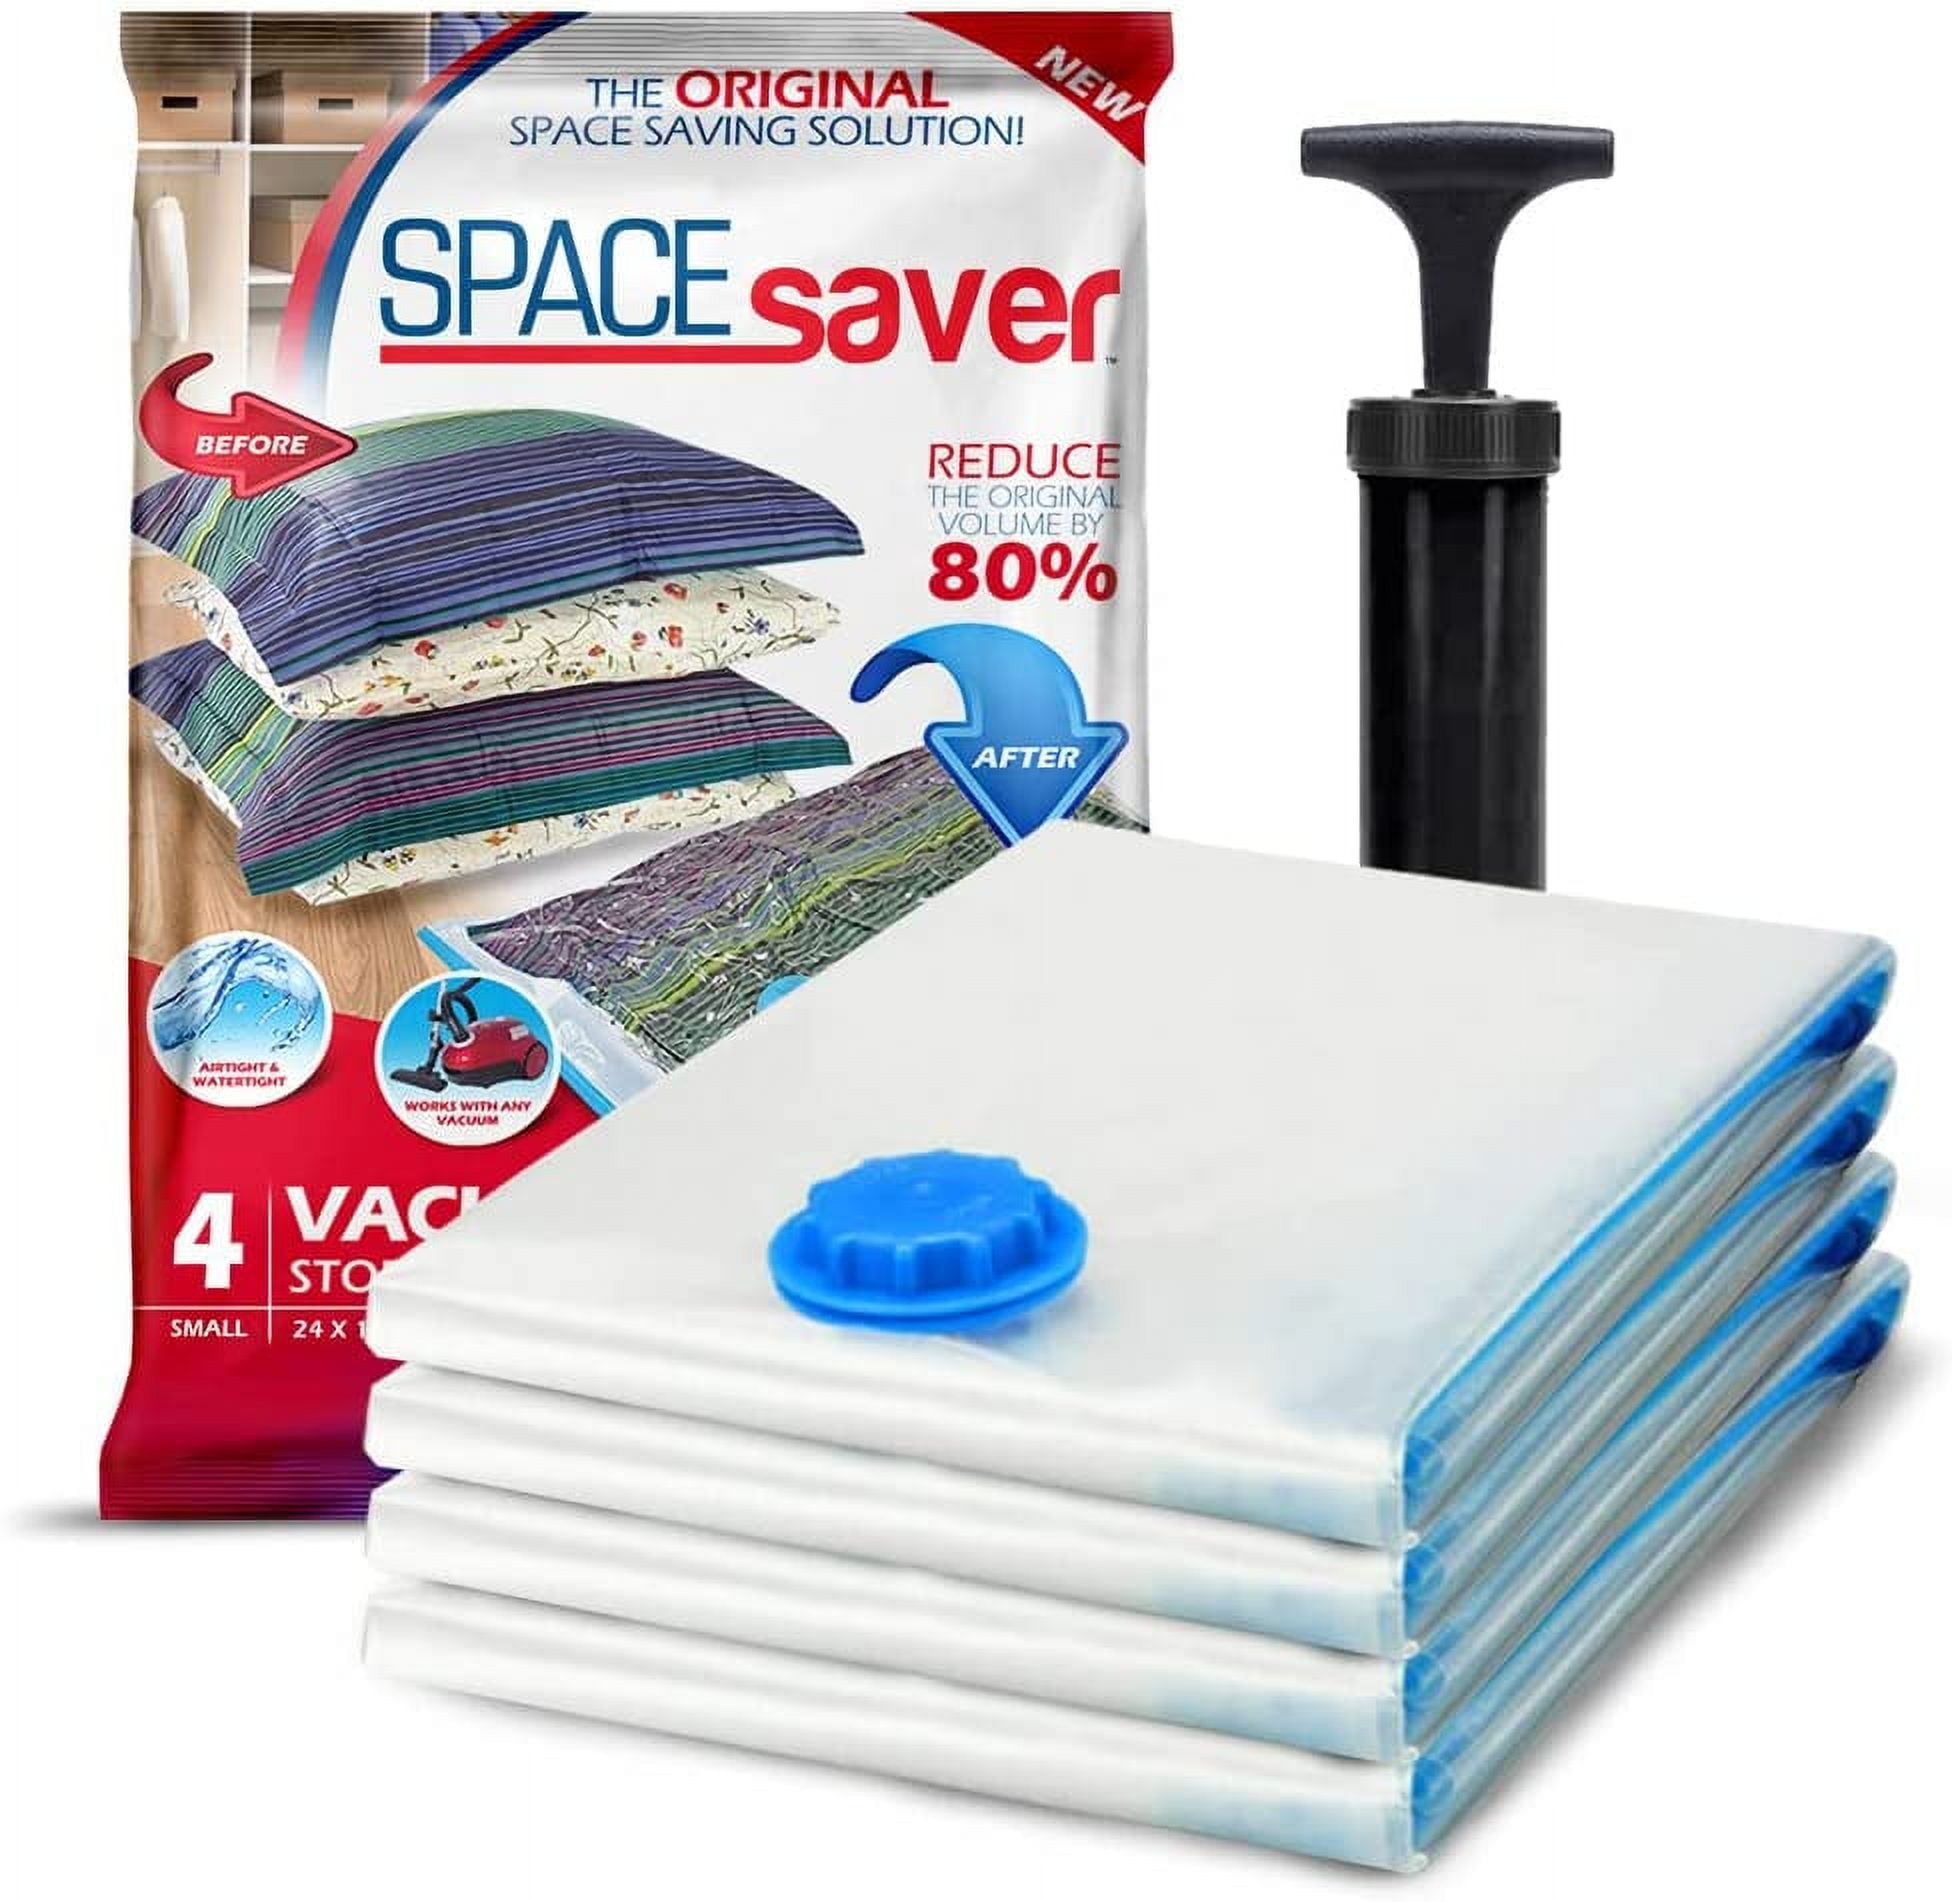 Hefty Shrink-Pak 3-Count Vacuum Seal Storage Bags in the Plastic